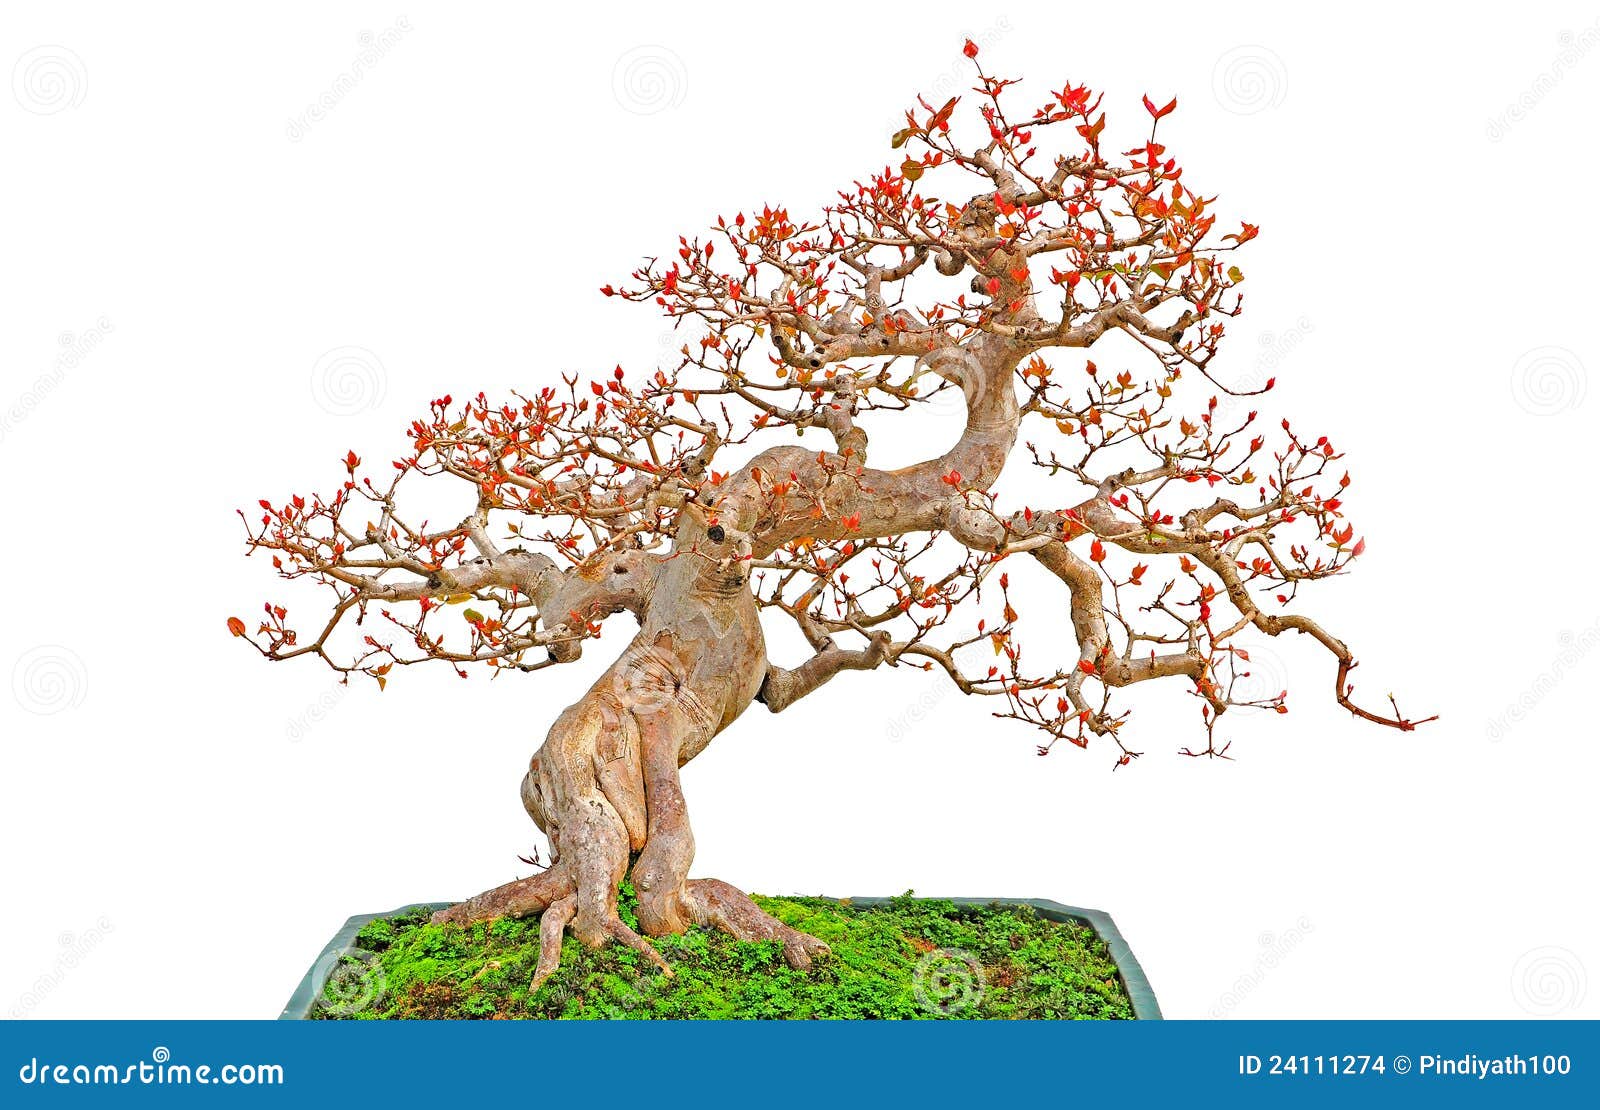 bonsai cascade plant